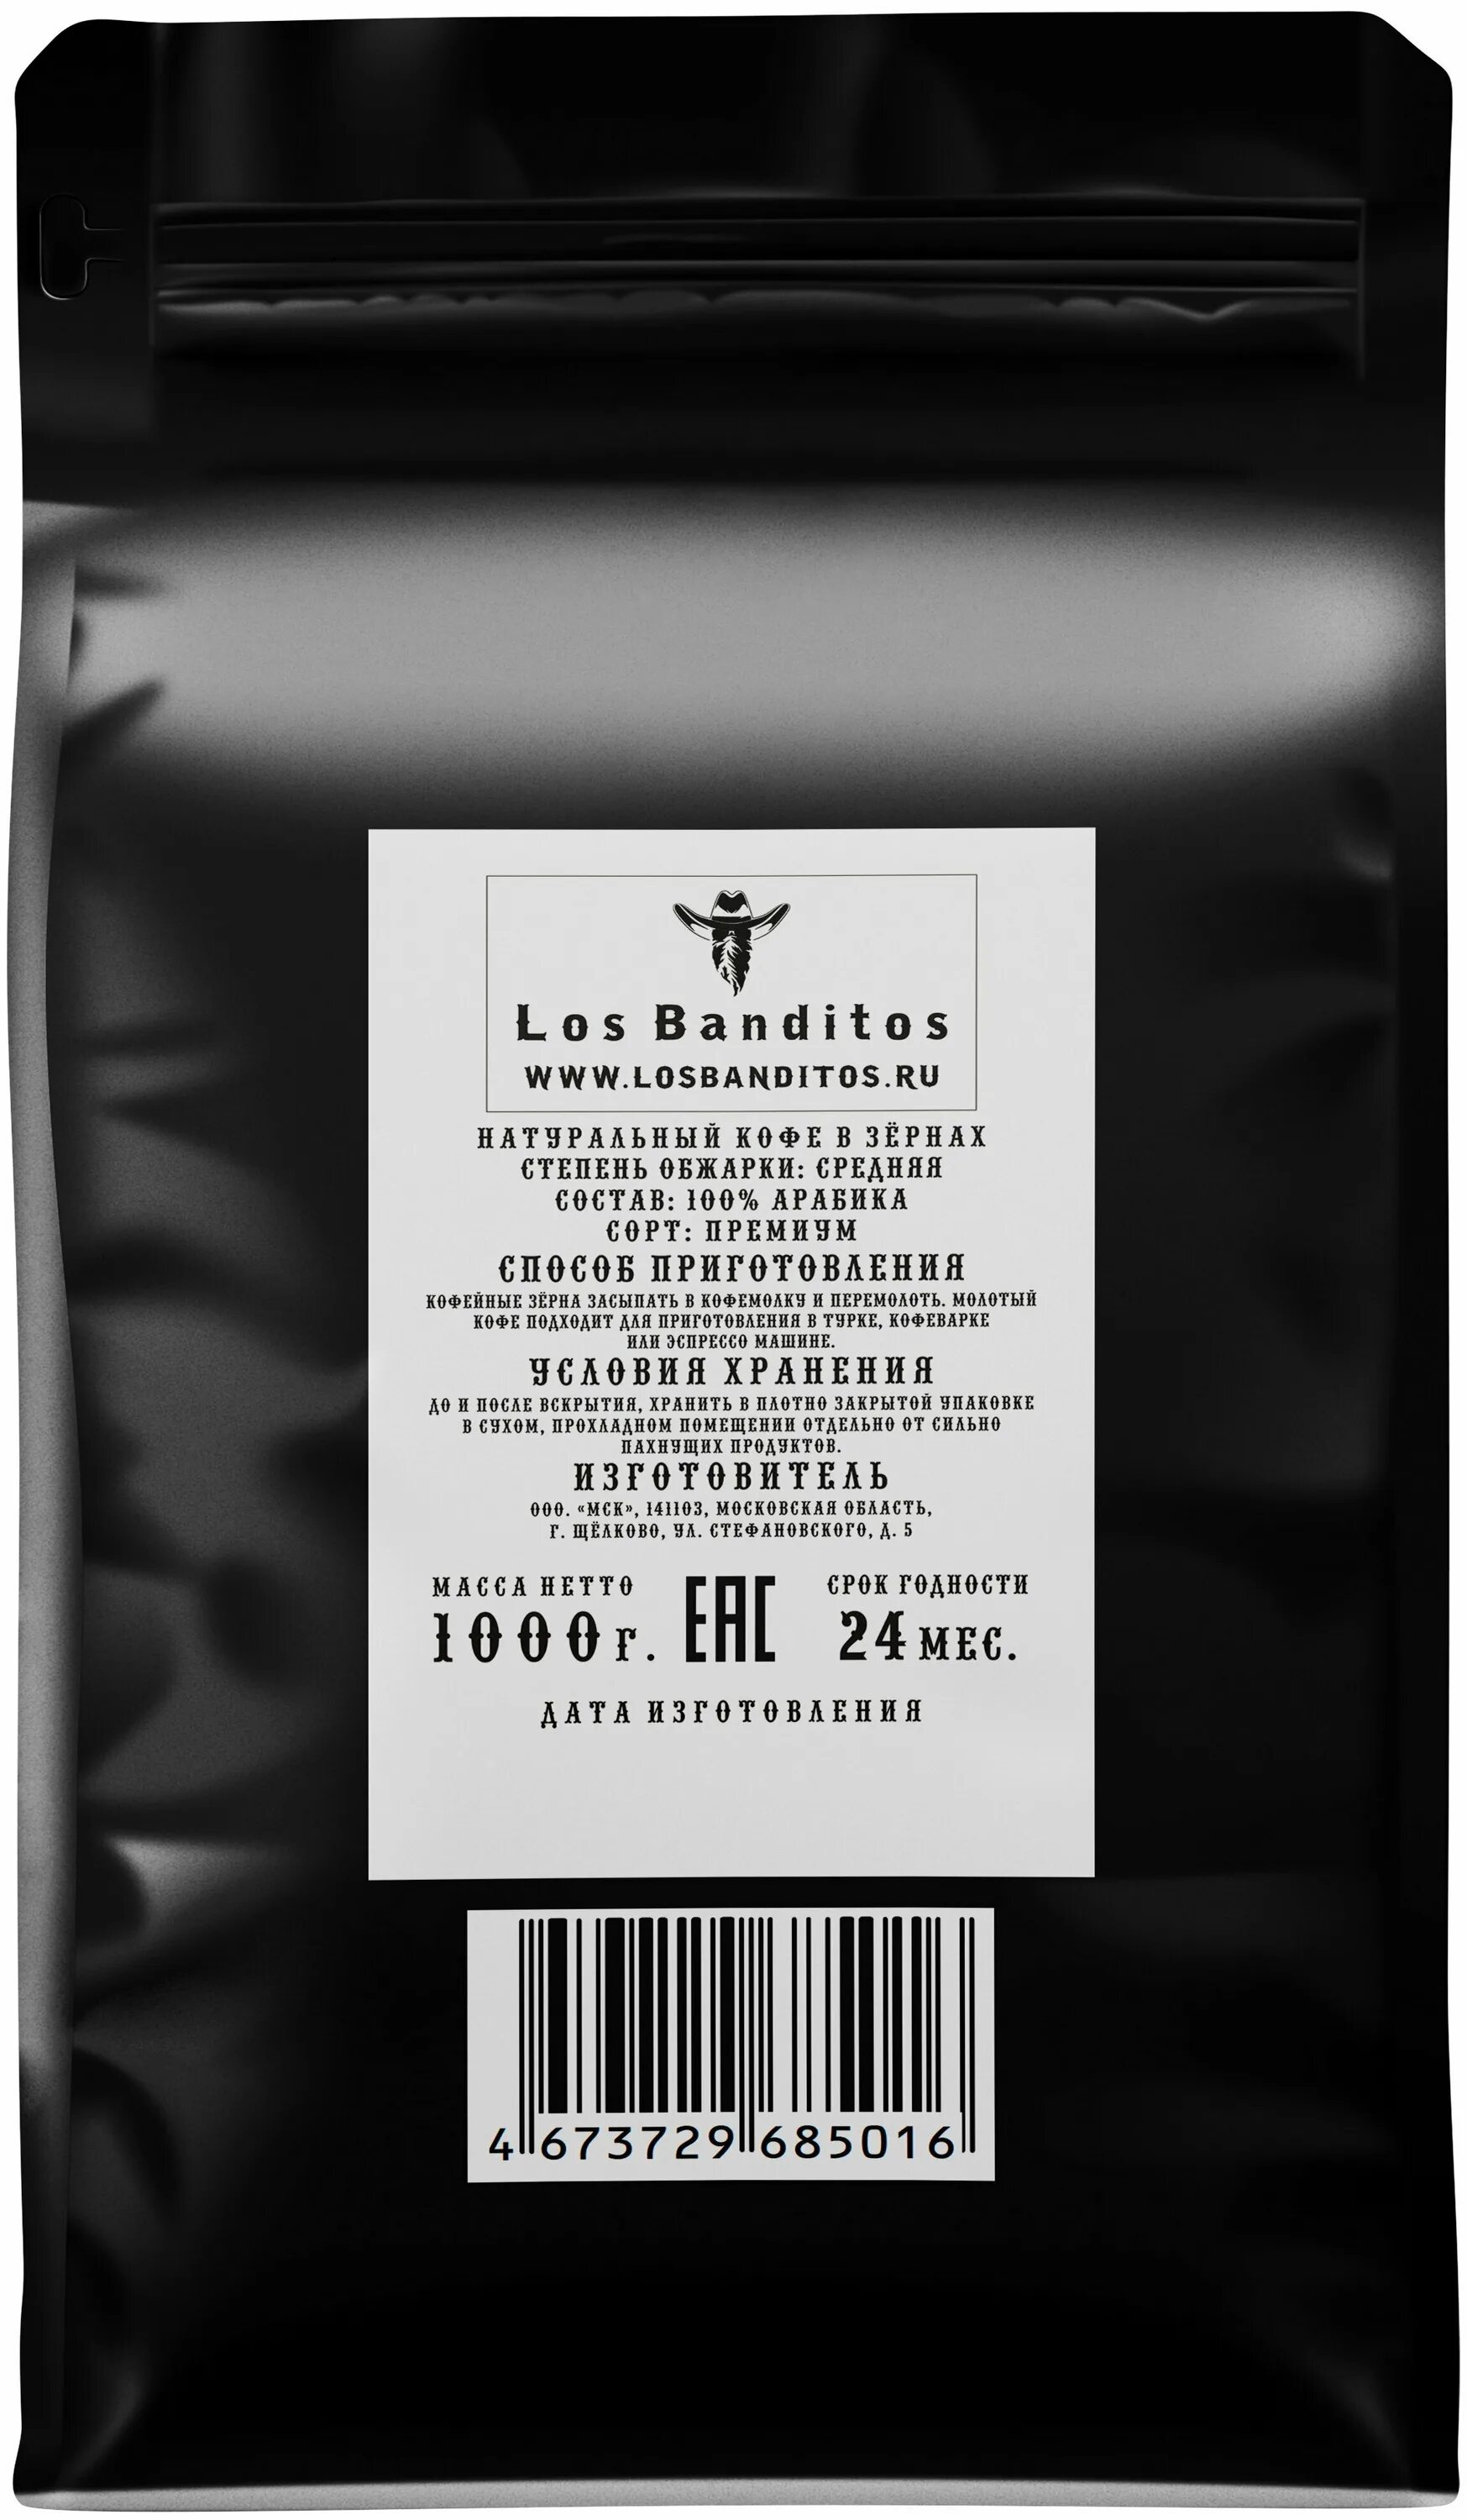 Лос бандитос. Los Banditos кофе в зернах. Кофе Лос Бандитос цена в зернах. Оригинал Колумбия puta madre Лос Бандитос. Корм Бандитос картинки.